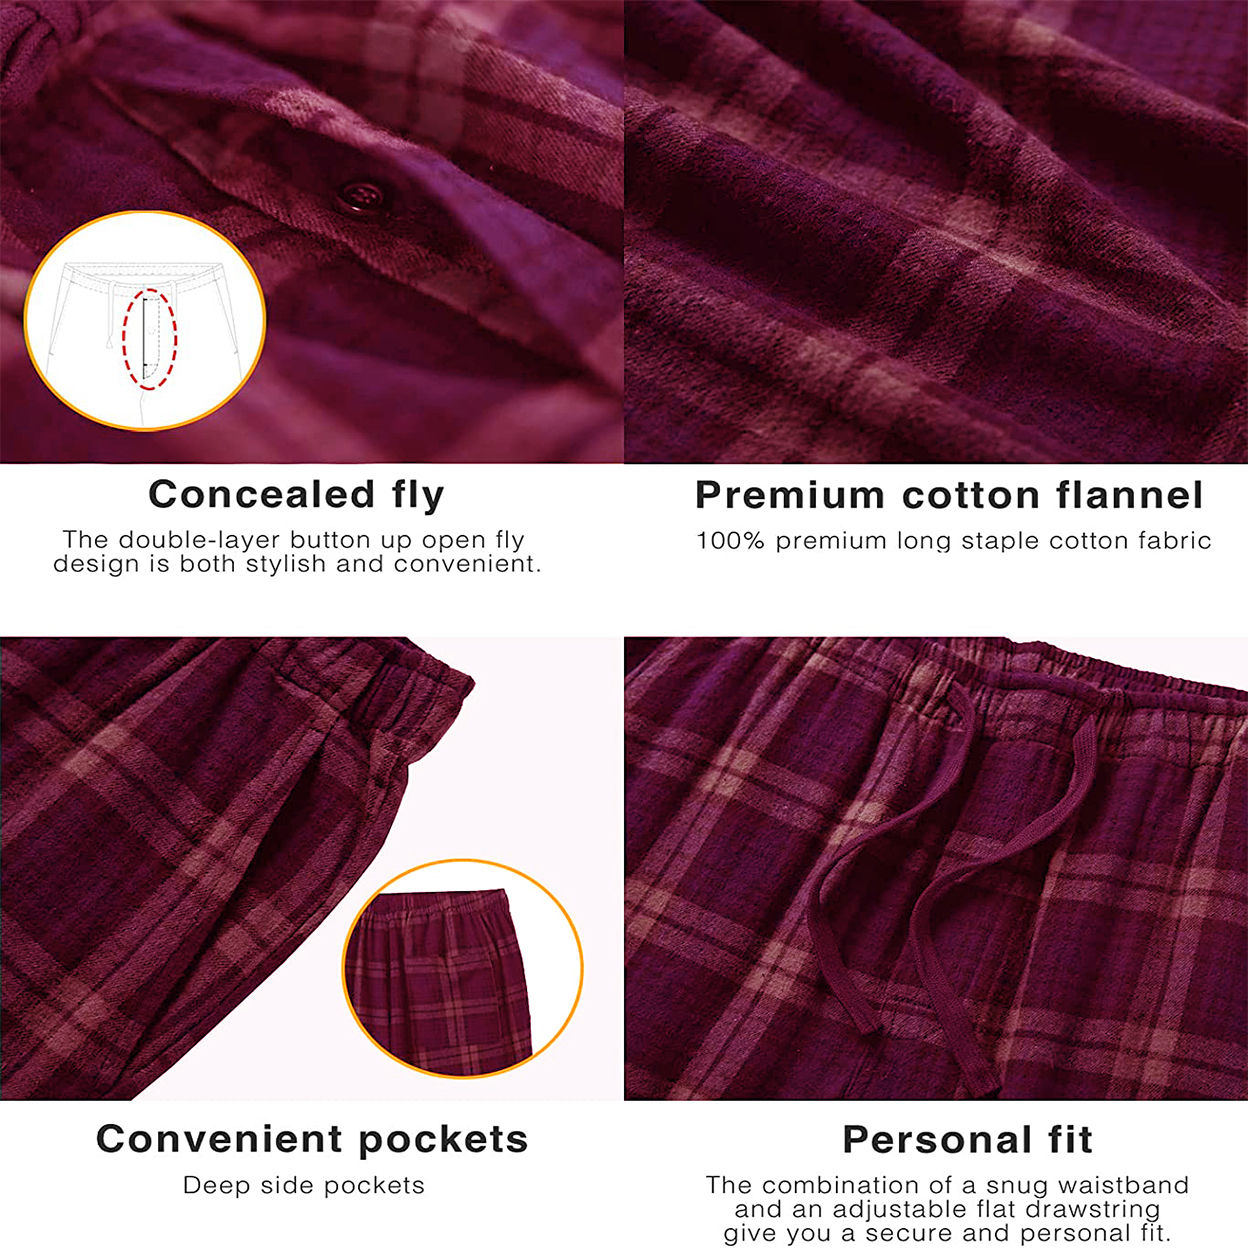 Men's Soft 100% Cotton Flannel Plaid Lounge Pajama Sleep Pants - 3-Pack, Medium